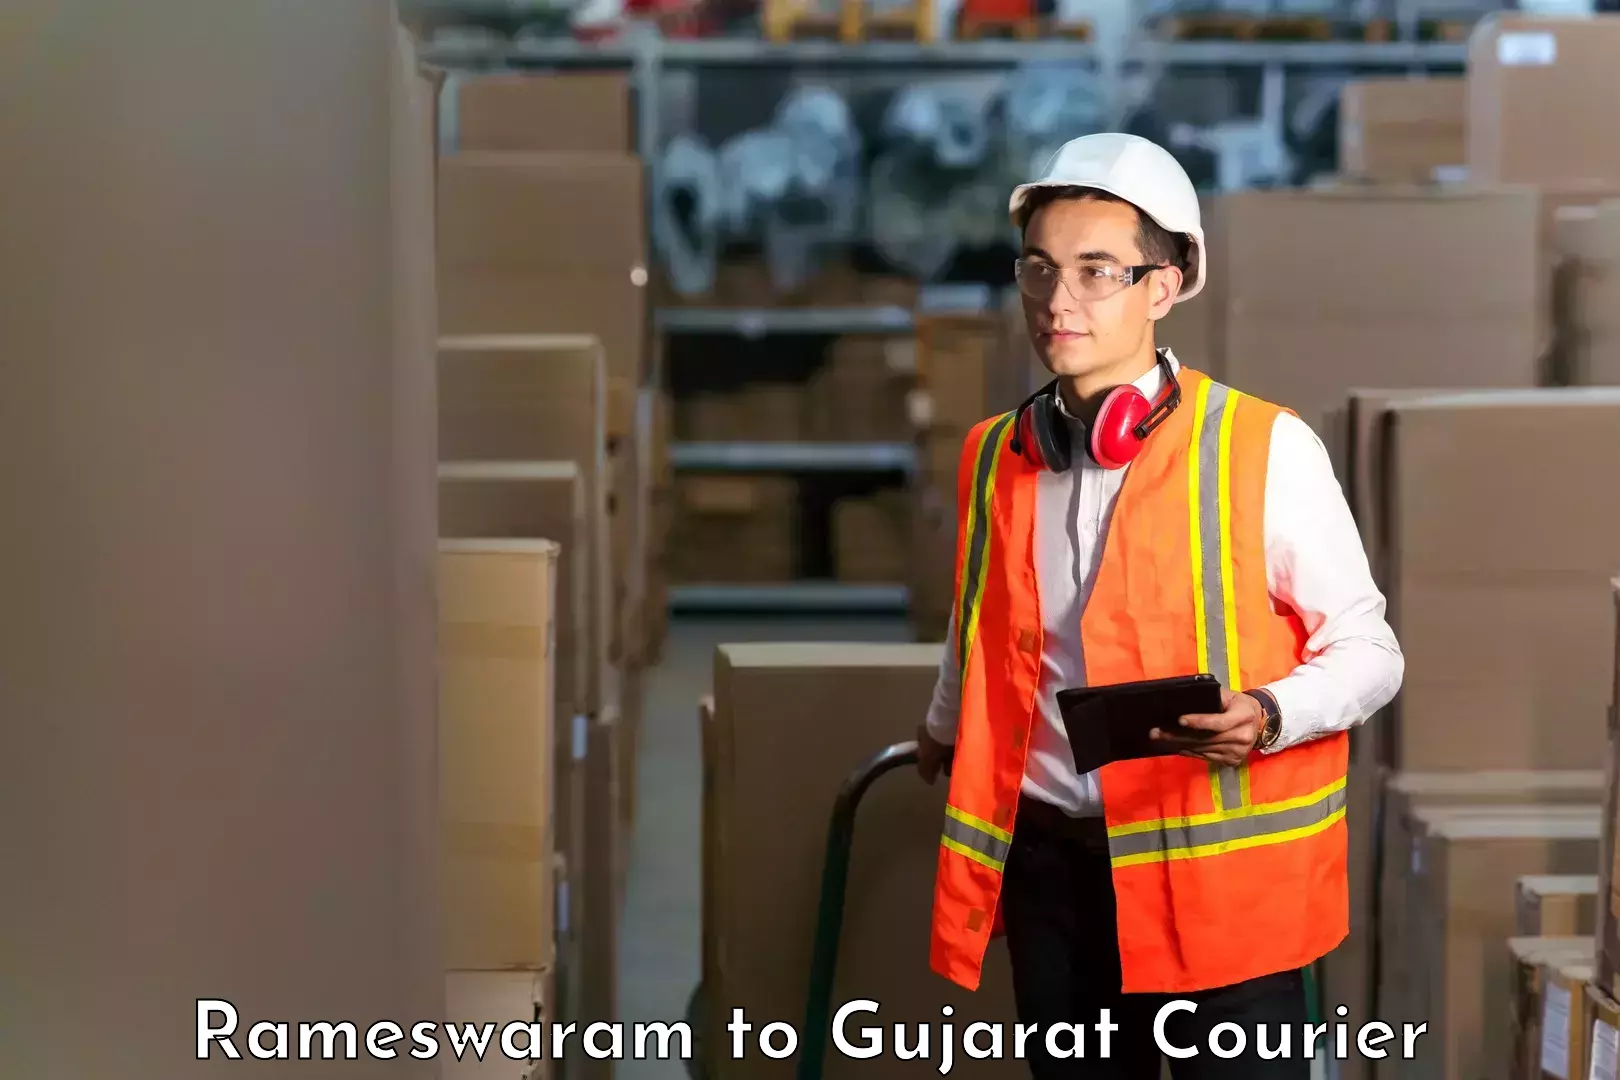 Global courier networks Rameswaram to Matar